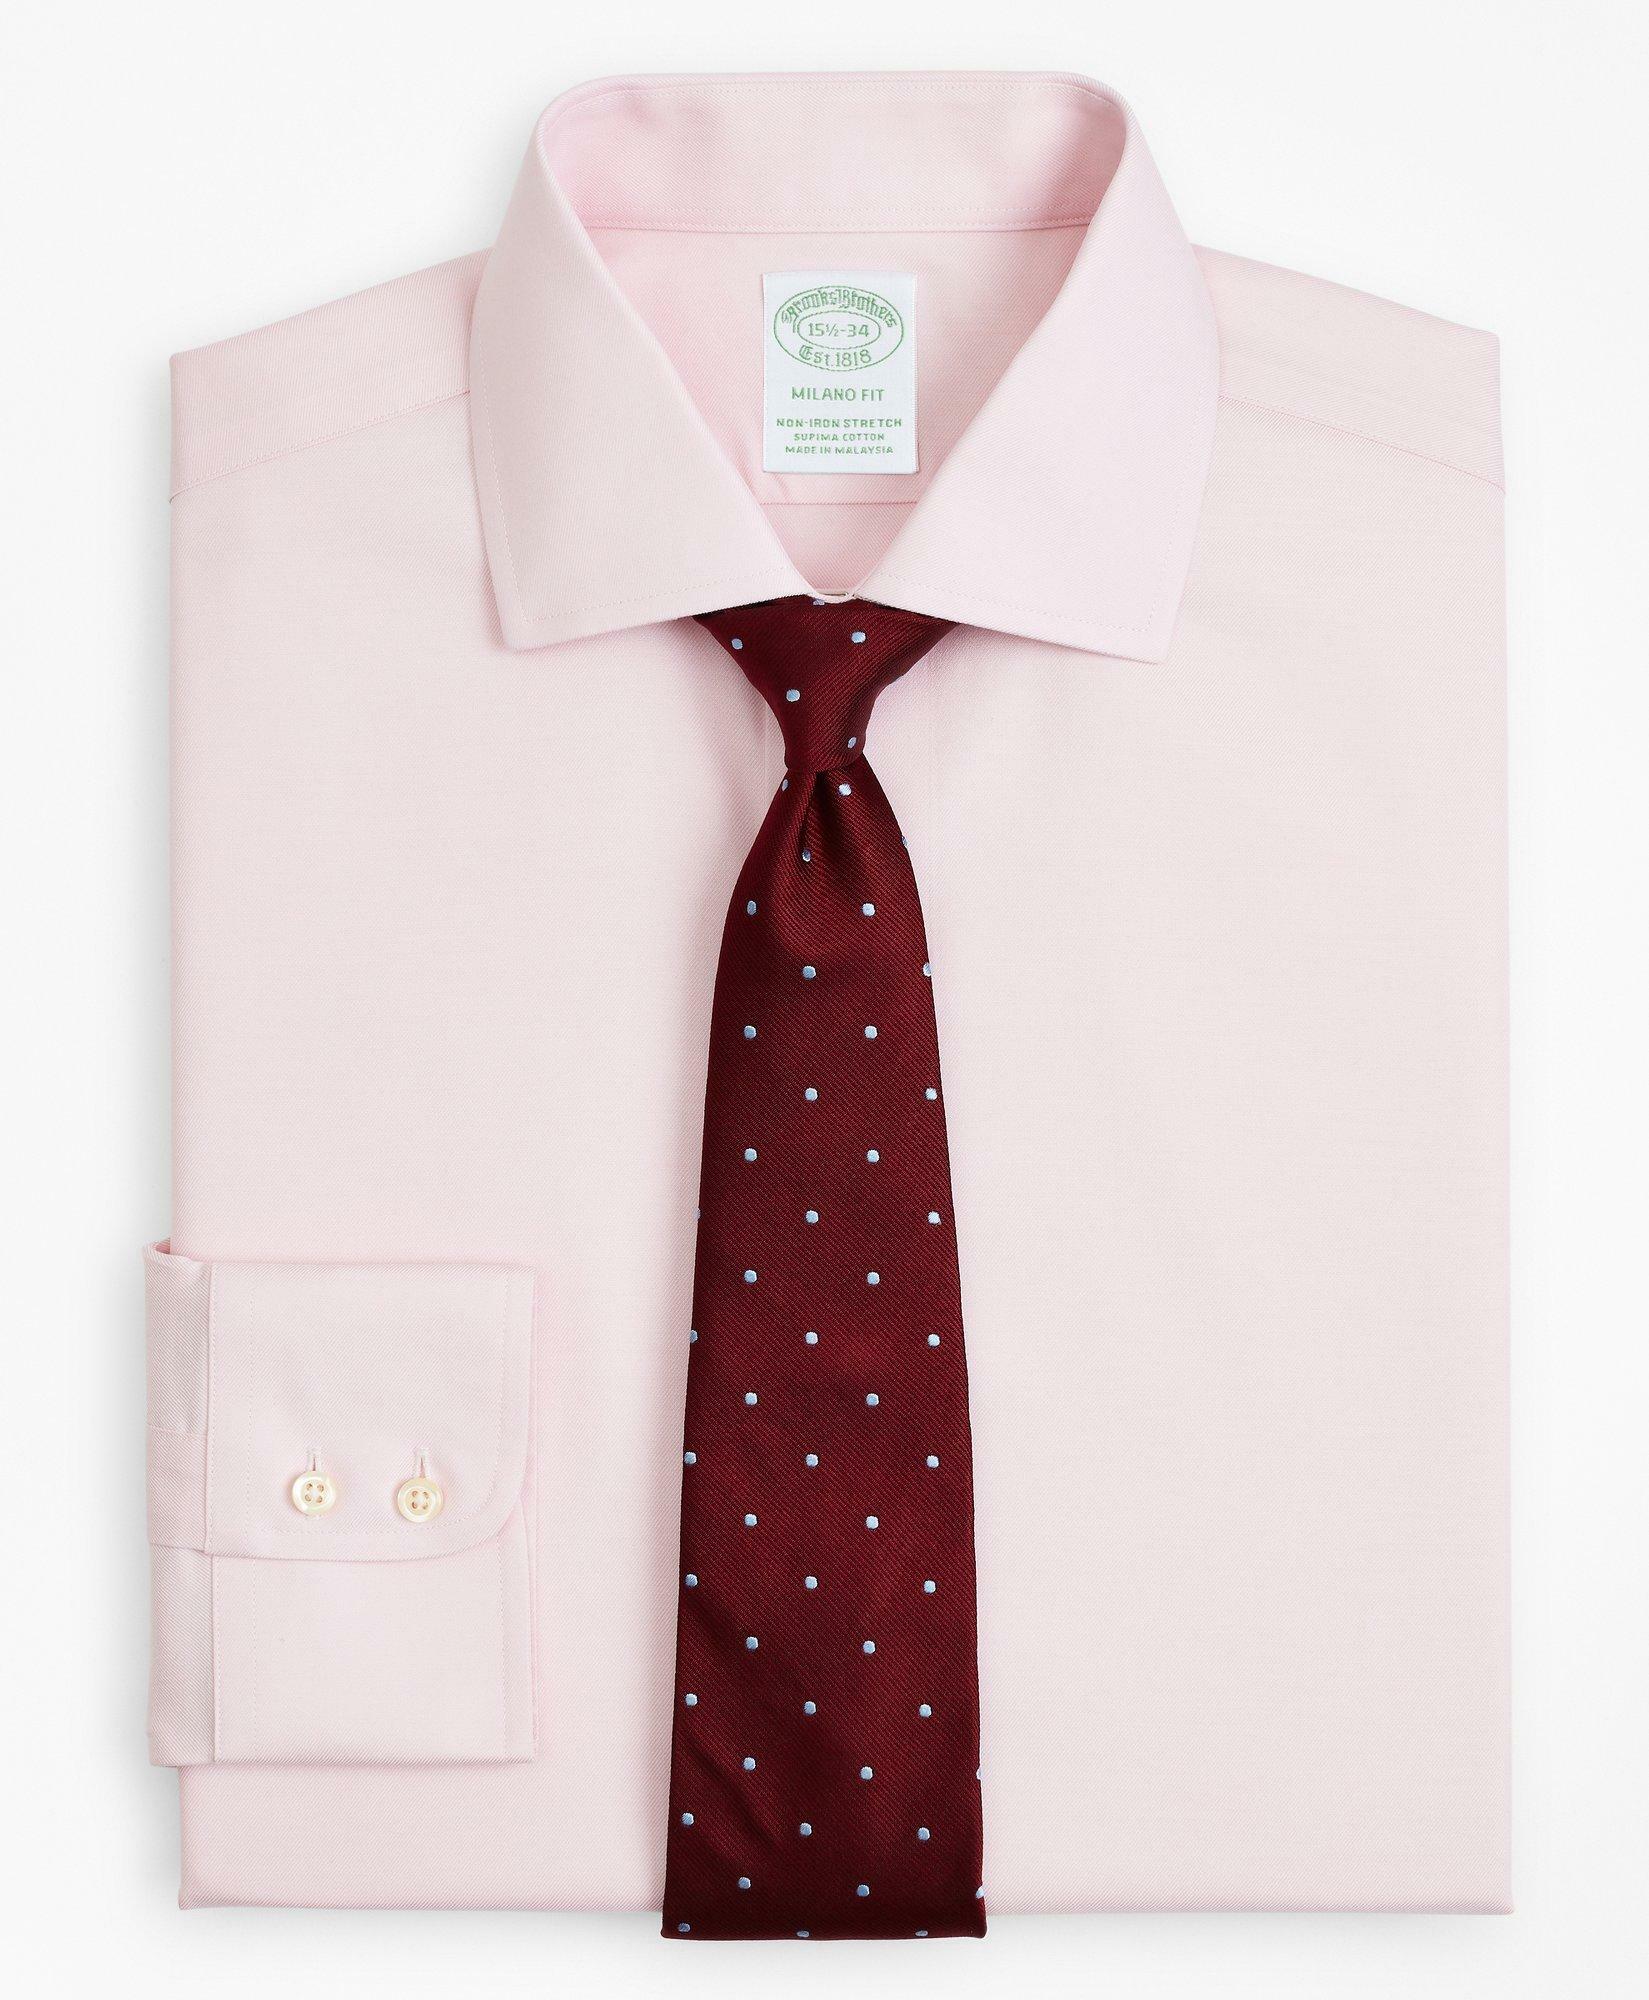 Brooks Brothers Men's Stretch Milano Slim-Fit Dress Shirt, Non-Iron Twill English Collar | Pink